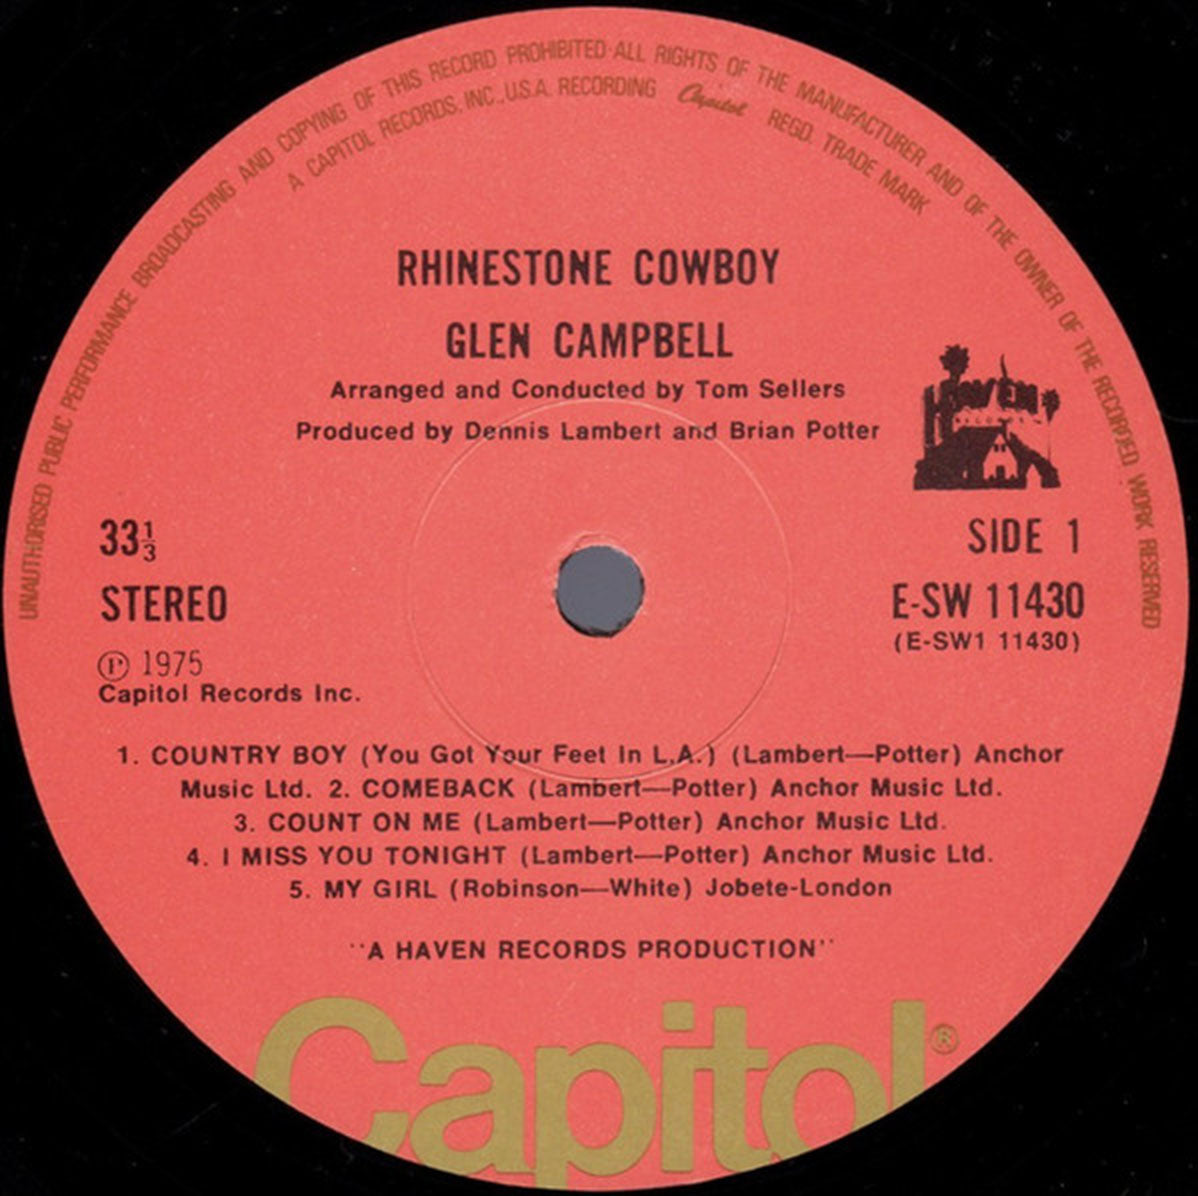 Glen Campbell – Rhinestone Cowboy - UK Pressing